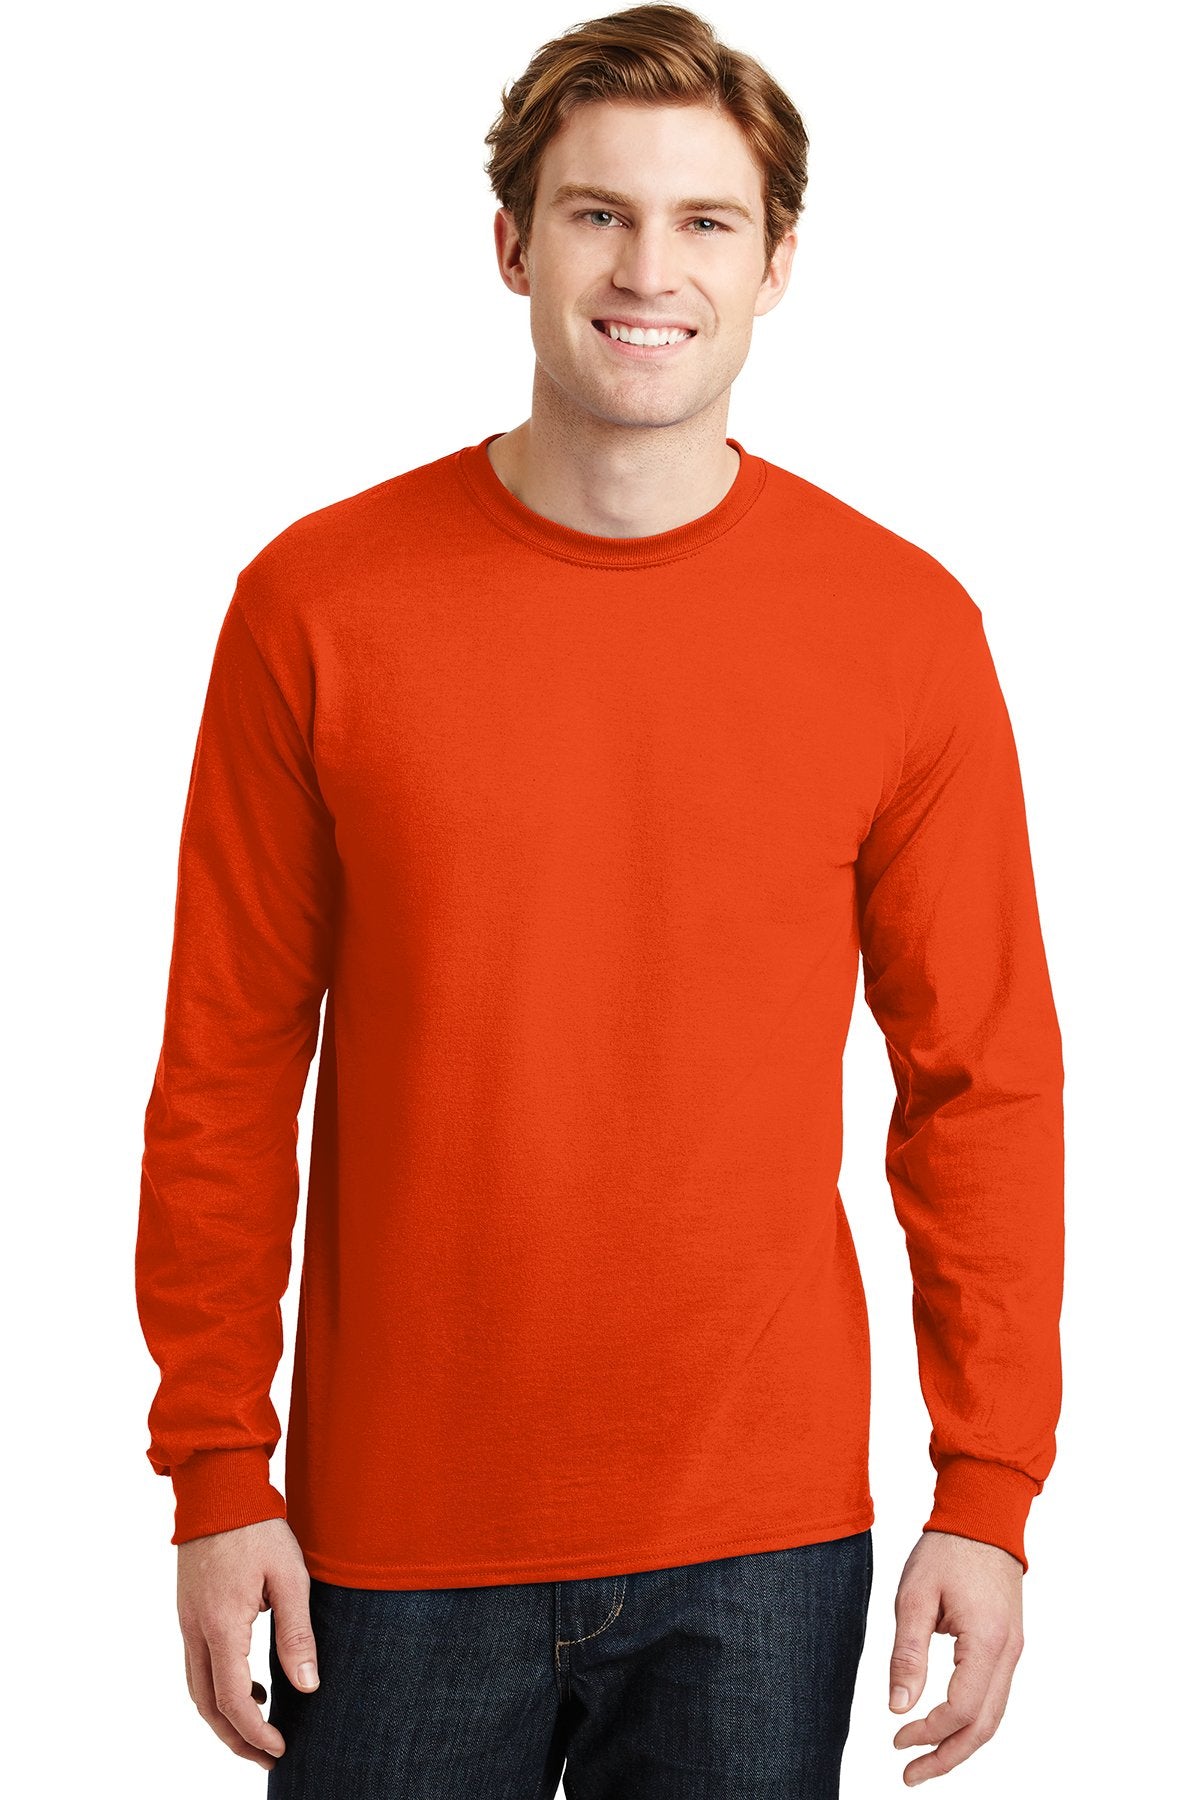 gildan dryblend cotton poly long sleeve t shirt 8400 orange